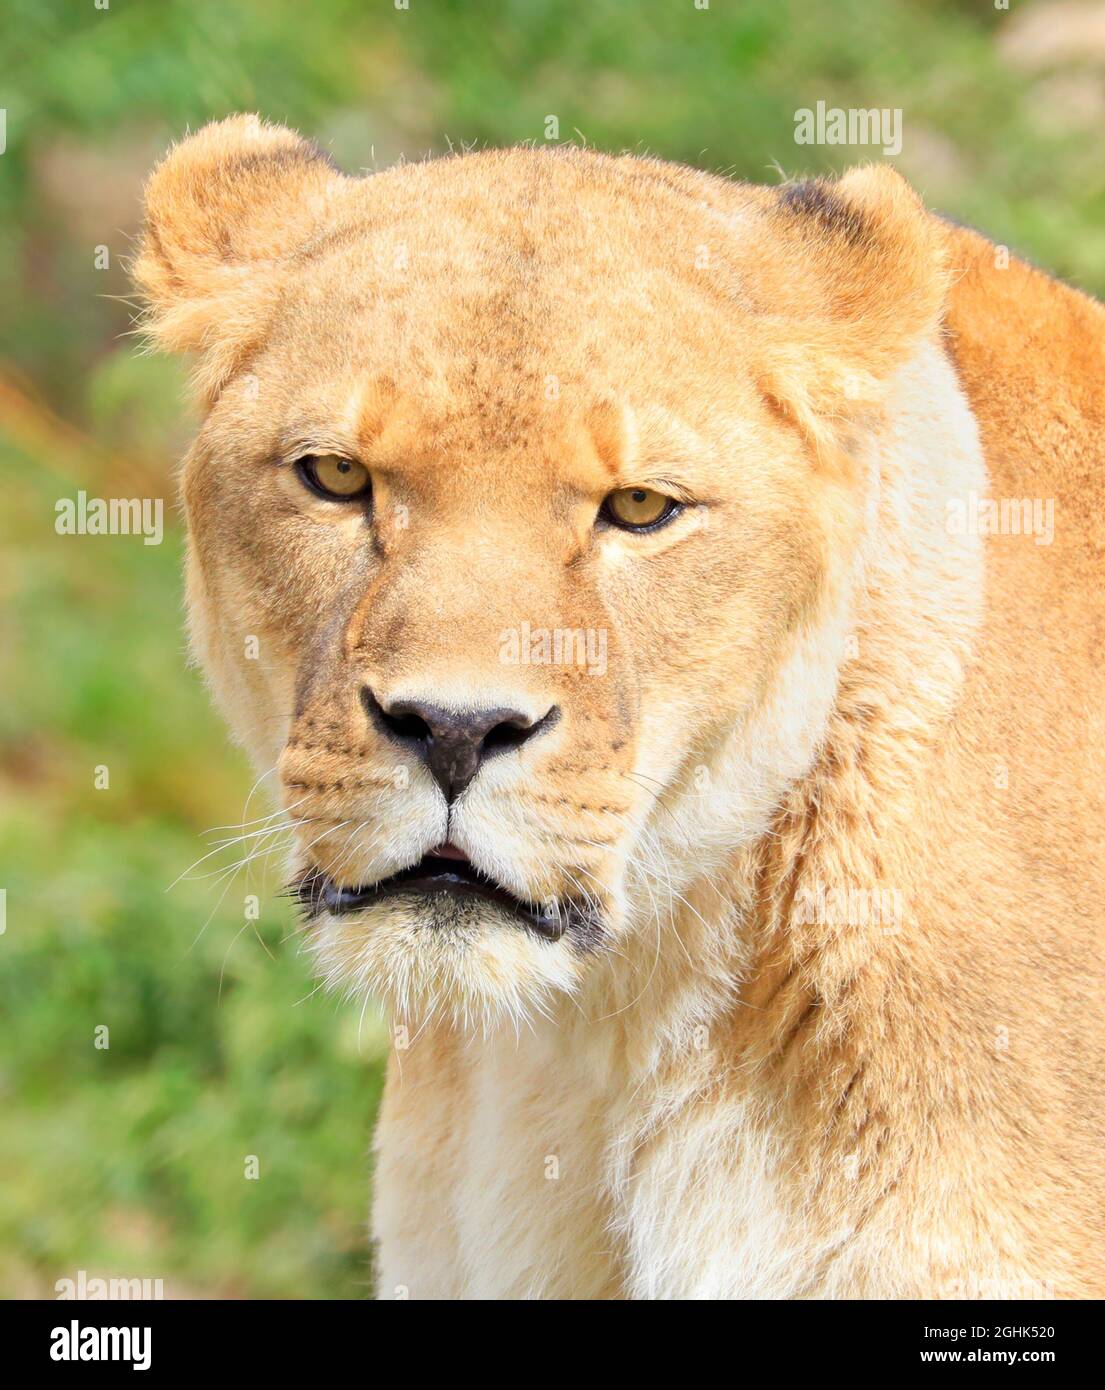 Female lion portrait on green background Stock Photo